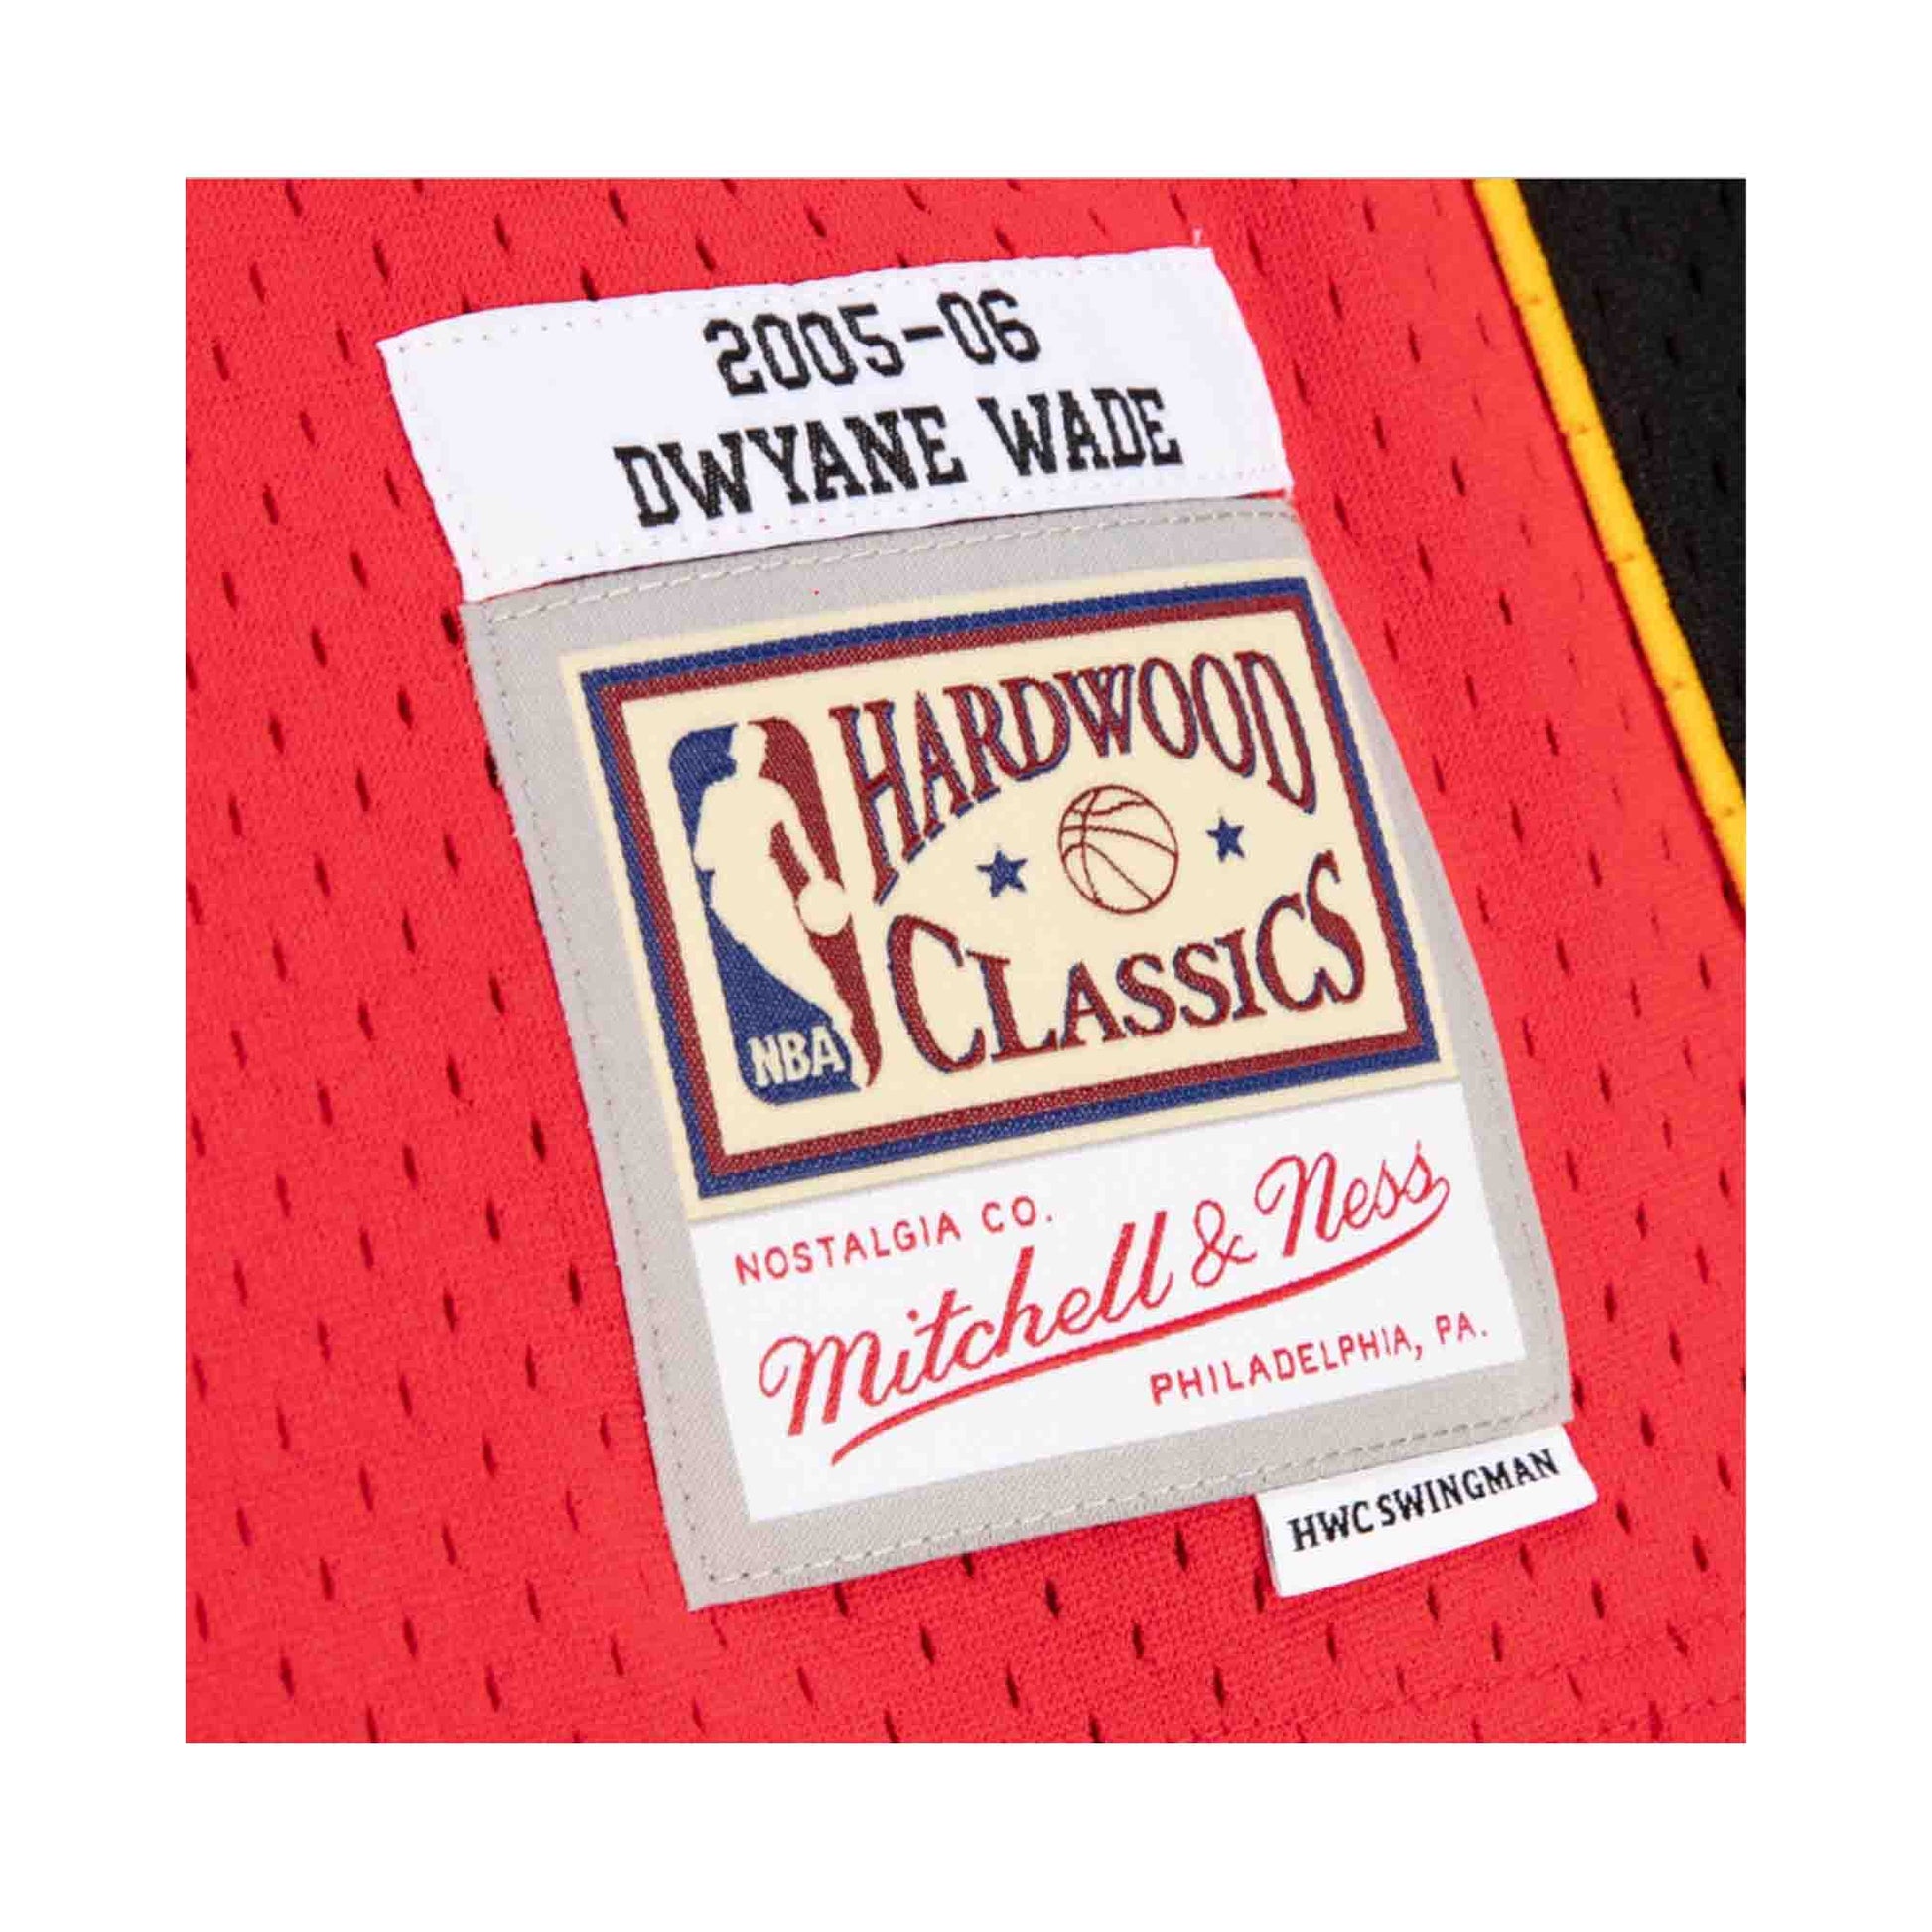 Dwyane Wade Miami Heat Hardwood Classics Throwback NBA Swingman